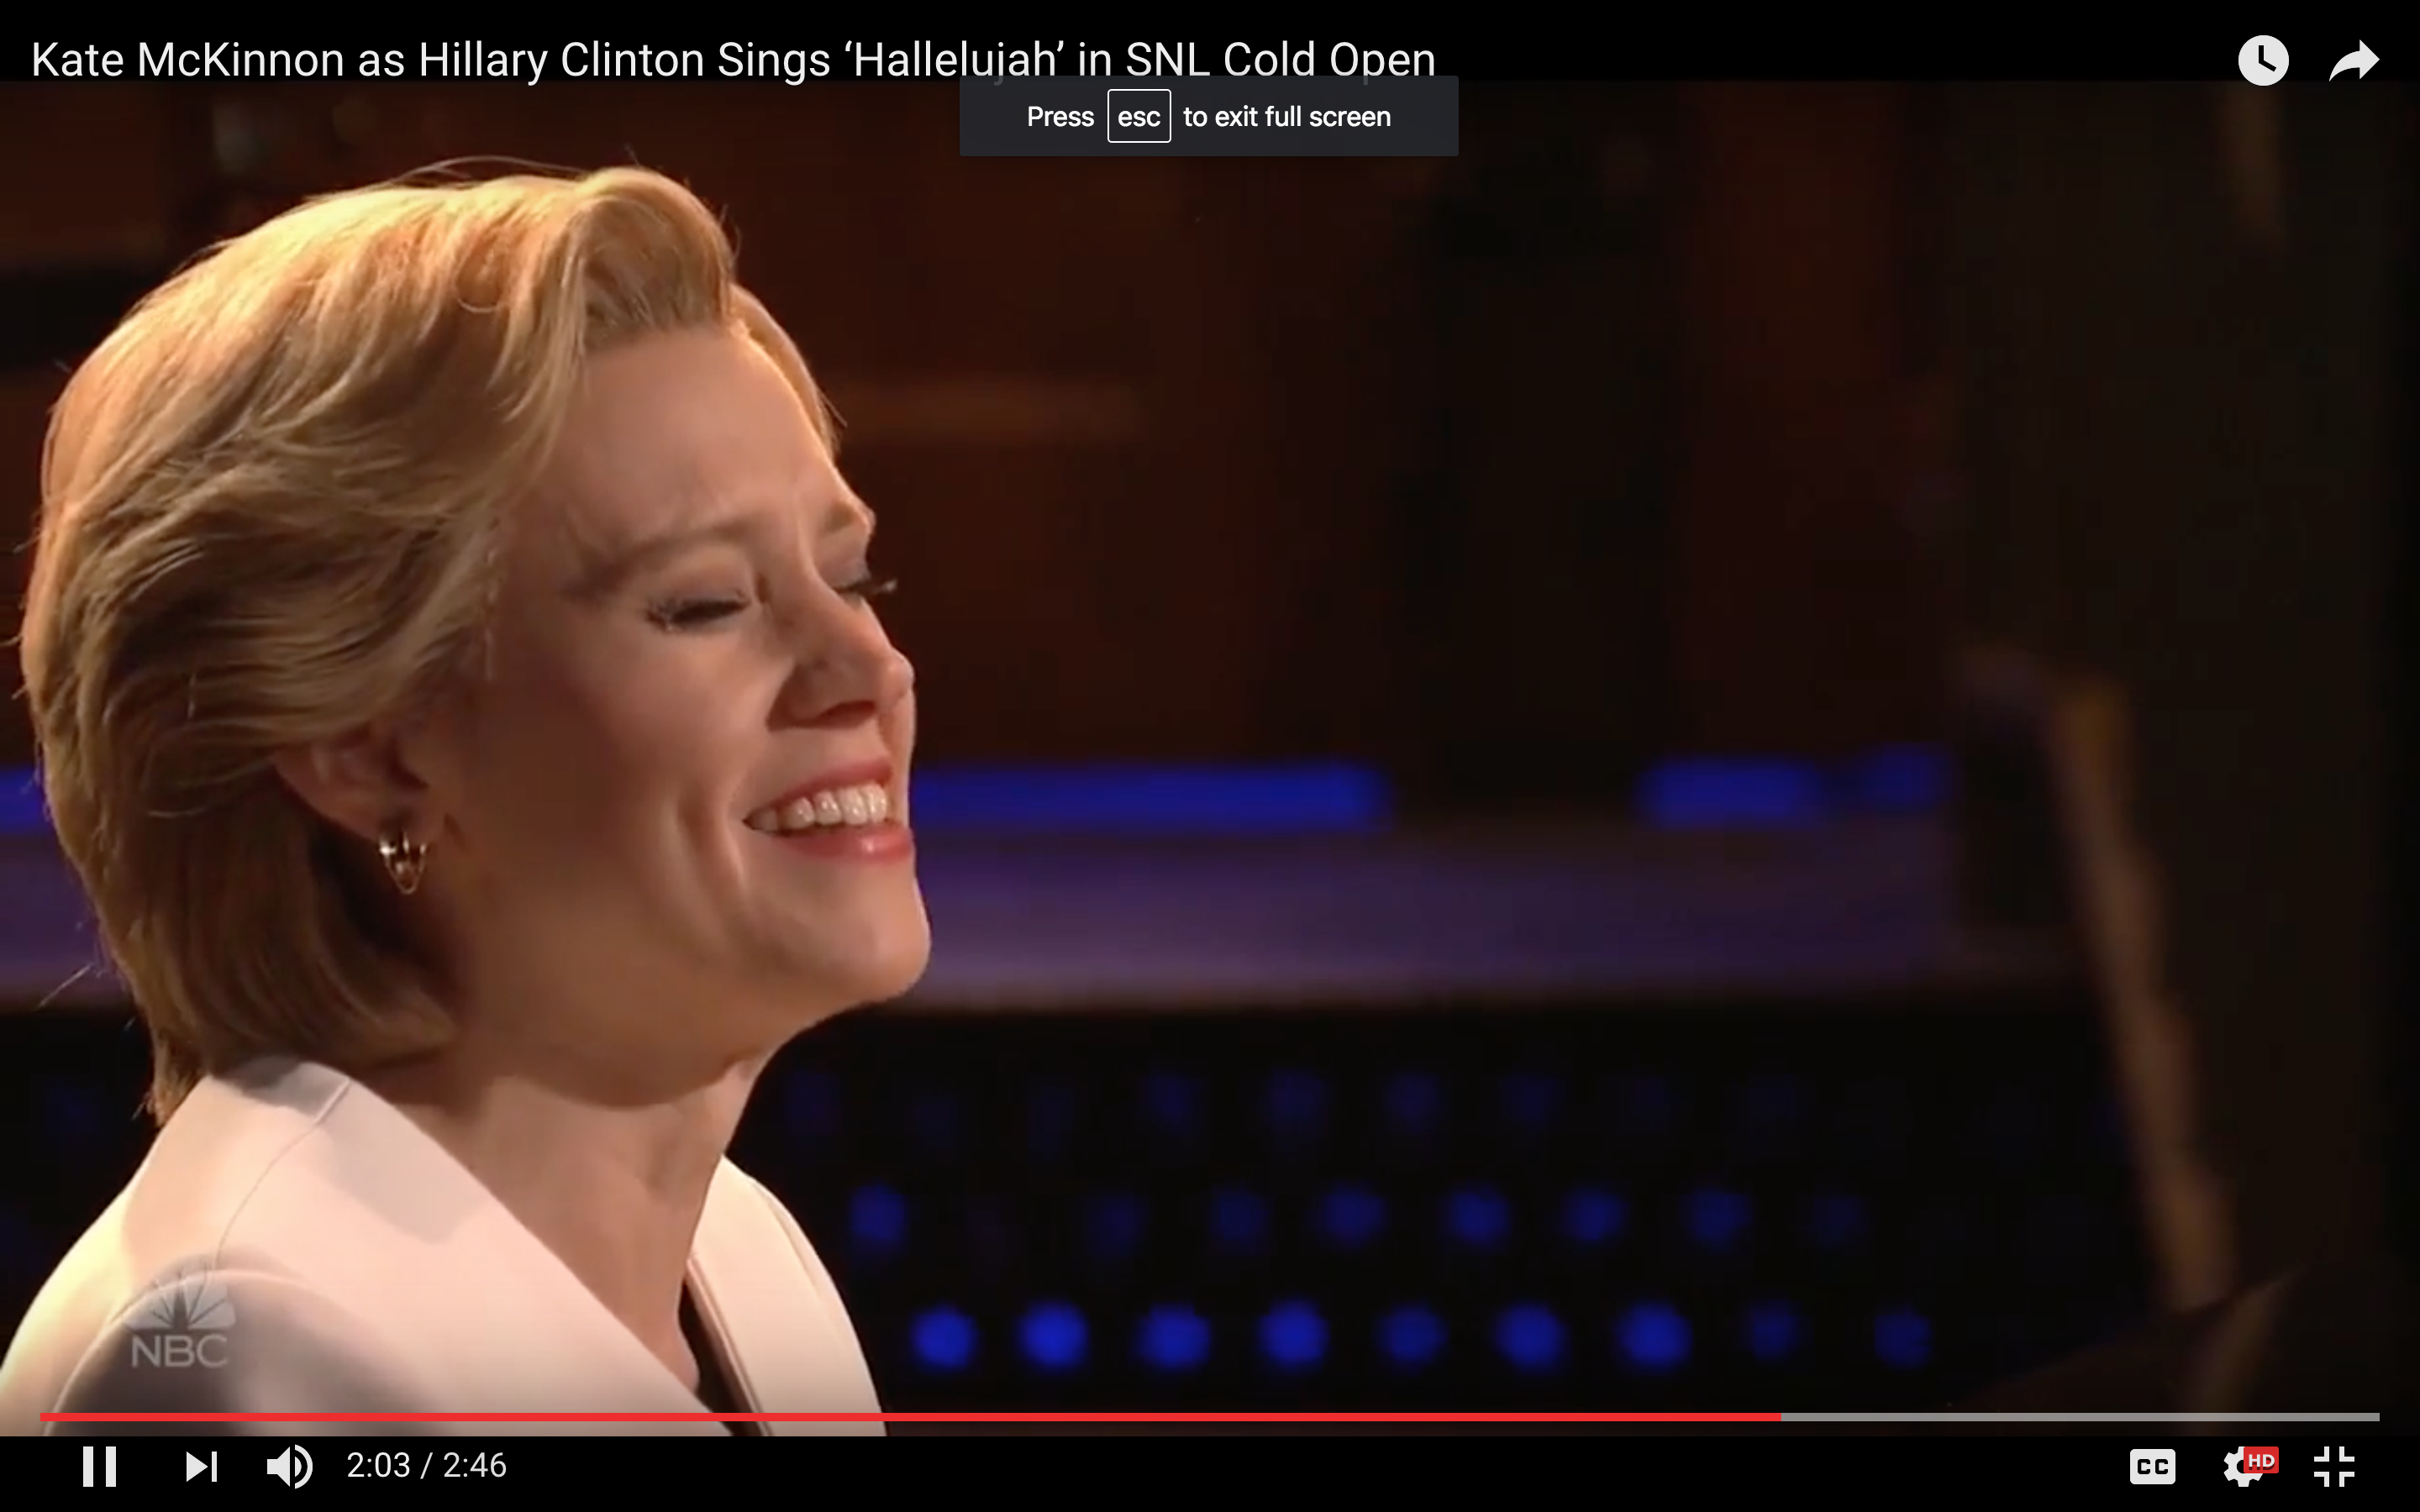 SNL: Kate McKinnon as Hillary Clinton Sings ‘Hallelujah’ Live